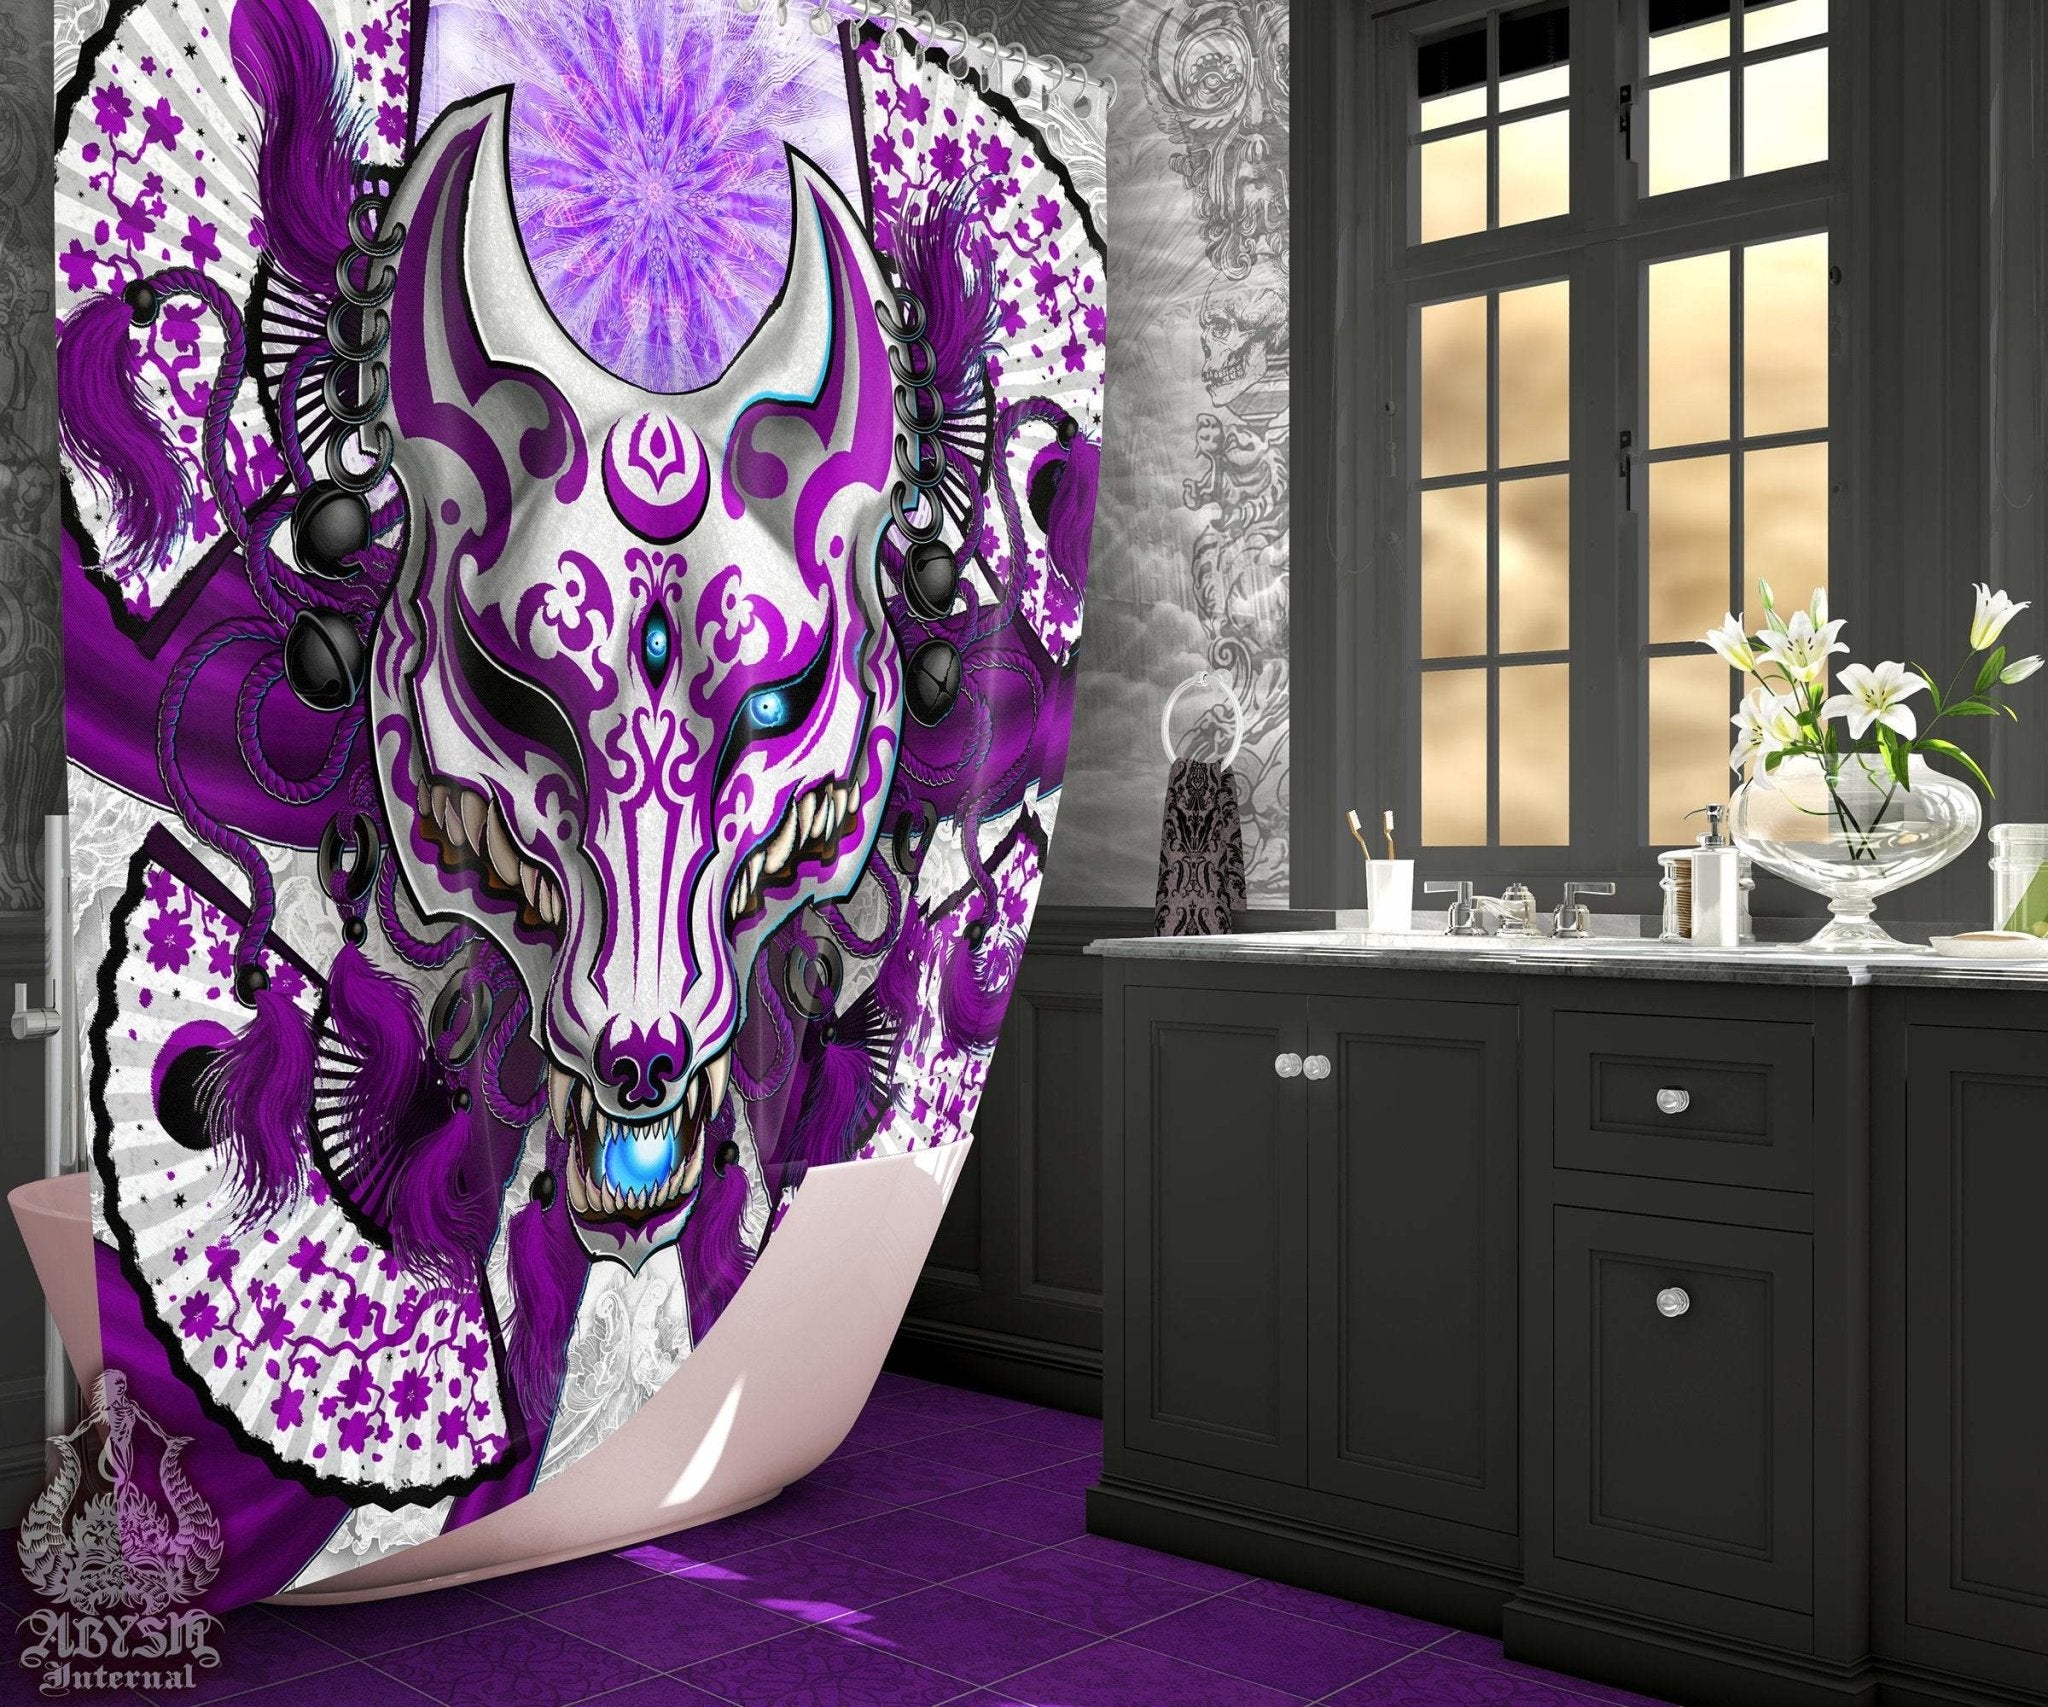 Pastel Goth Shower Curtain, Kitsune Mask, Okami, Anime, Gothic Bathroom Decor, Fox Art - White & Purple - Abysm Internal